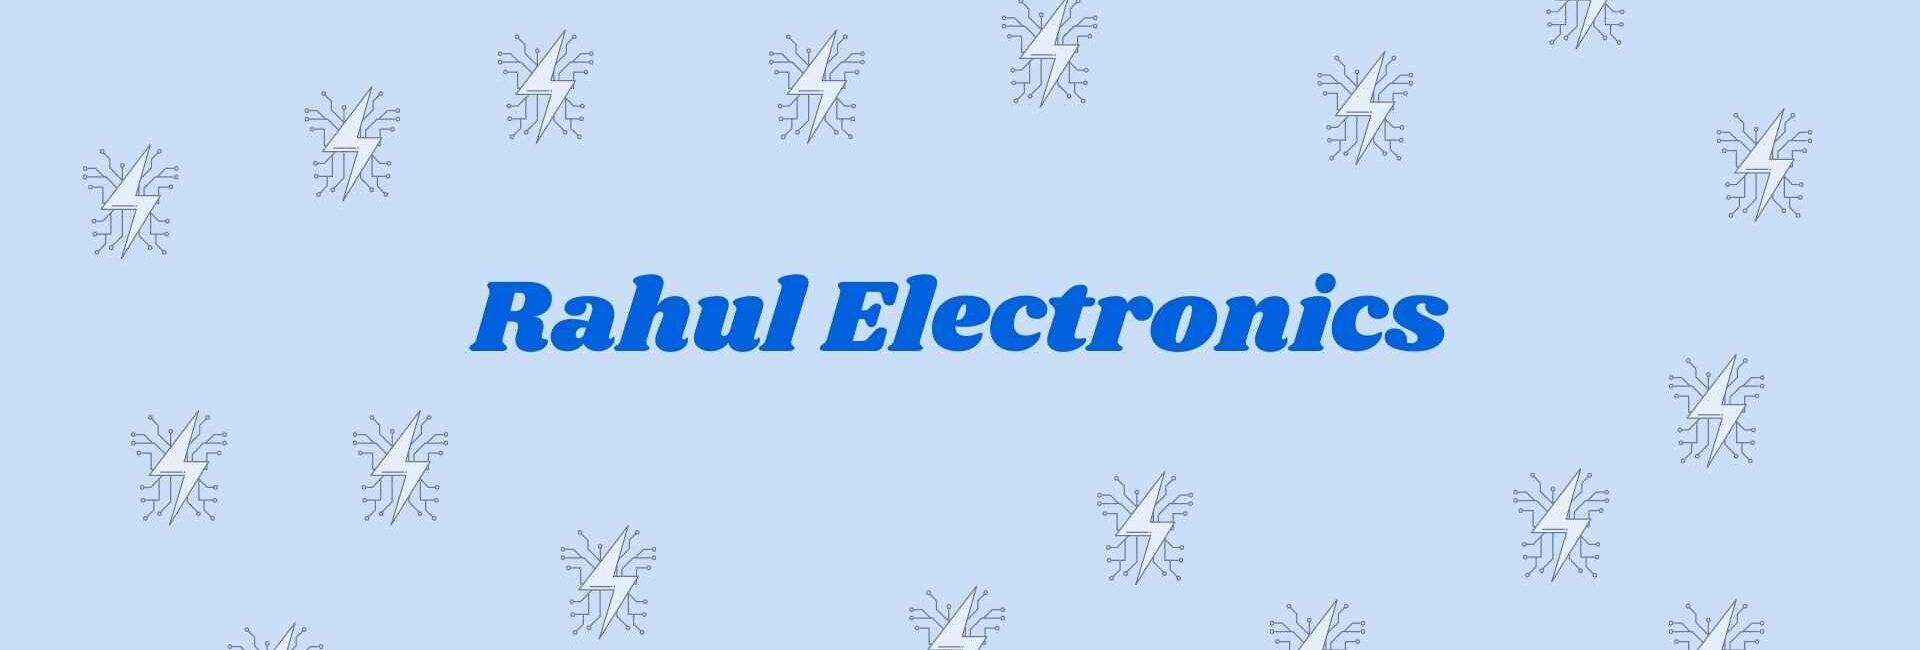 Rahul Electronics - Electronics Goods Dealer in Noida